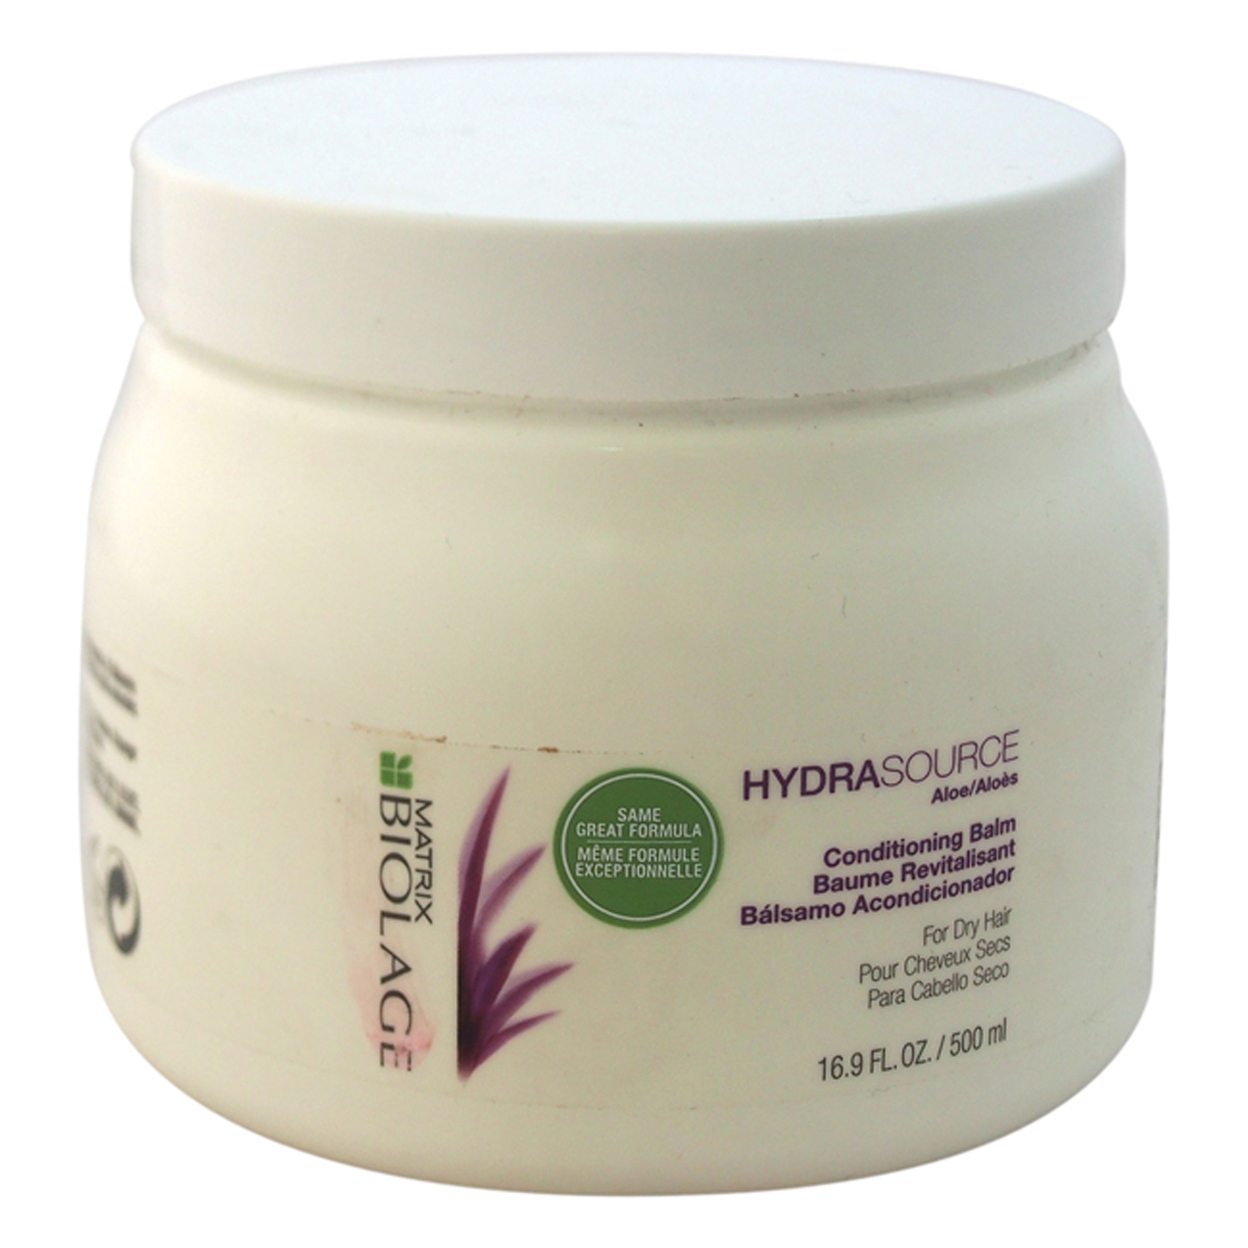 Matrix Biolage Hydrasource Conditioning Balm For Dry Hair Balm 16.9 Oz